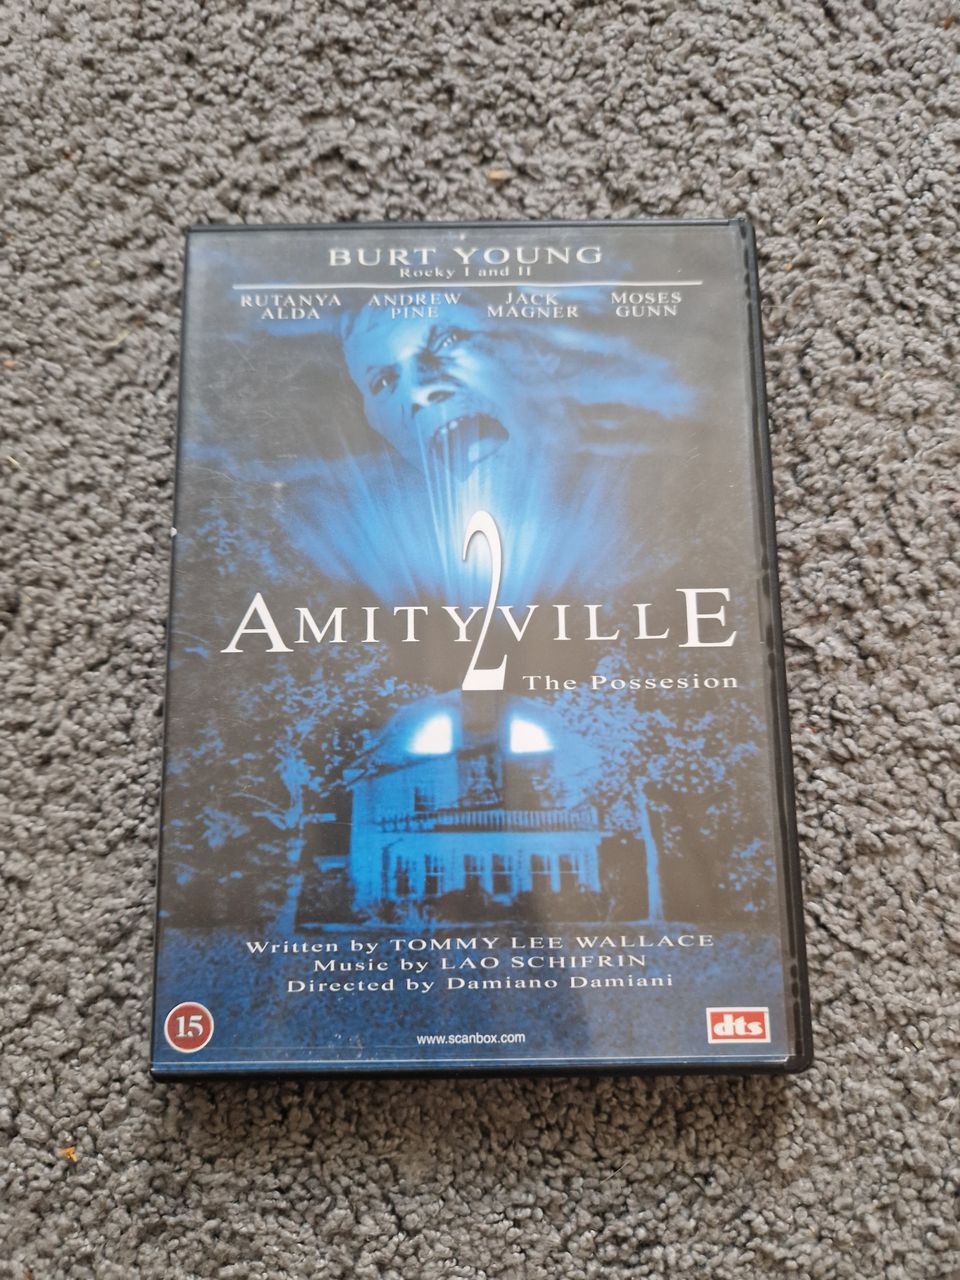 Amityville 2 The Possession - FI DVD